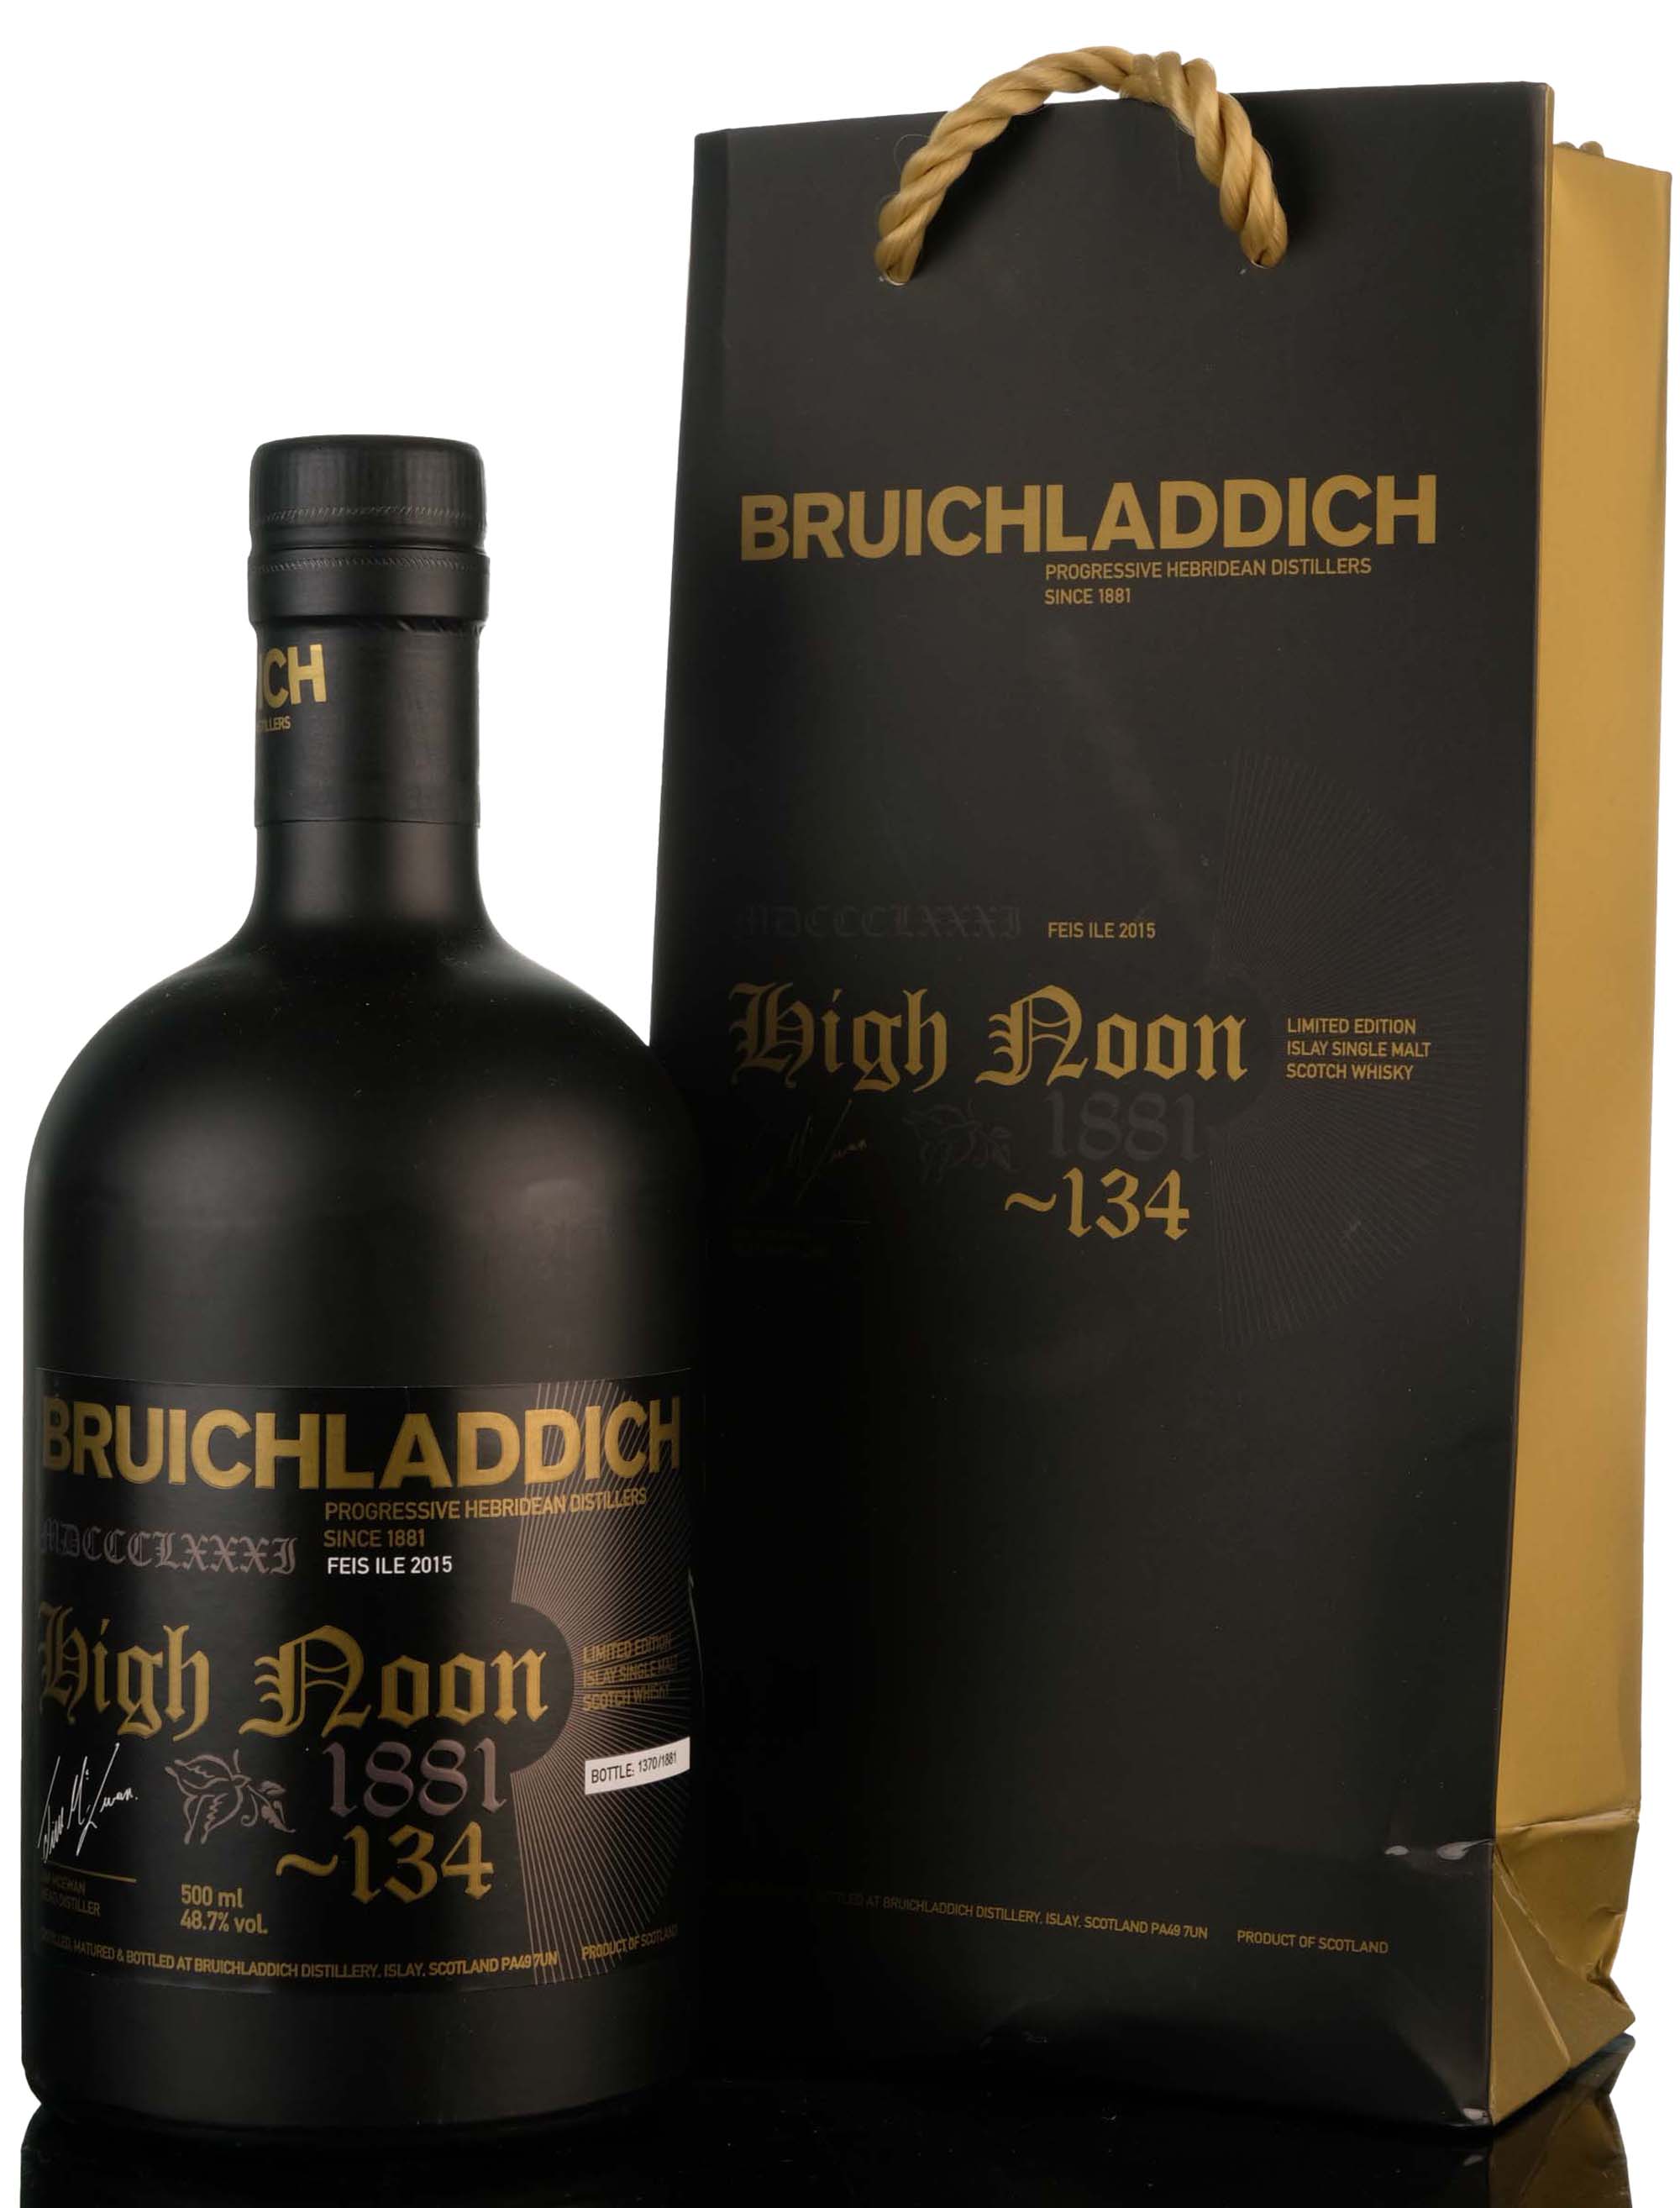 Bruichladdich Festival 2015 - High Noon - Valinch - Signed Bottle